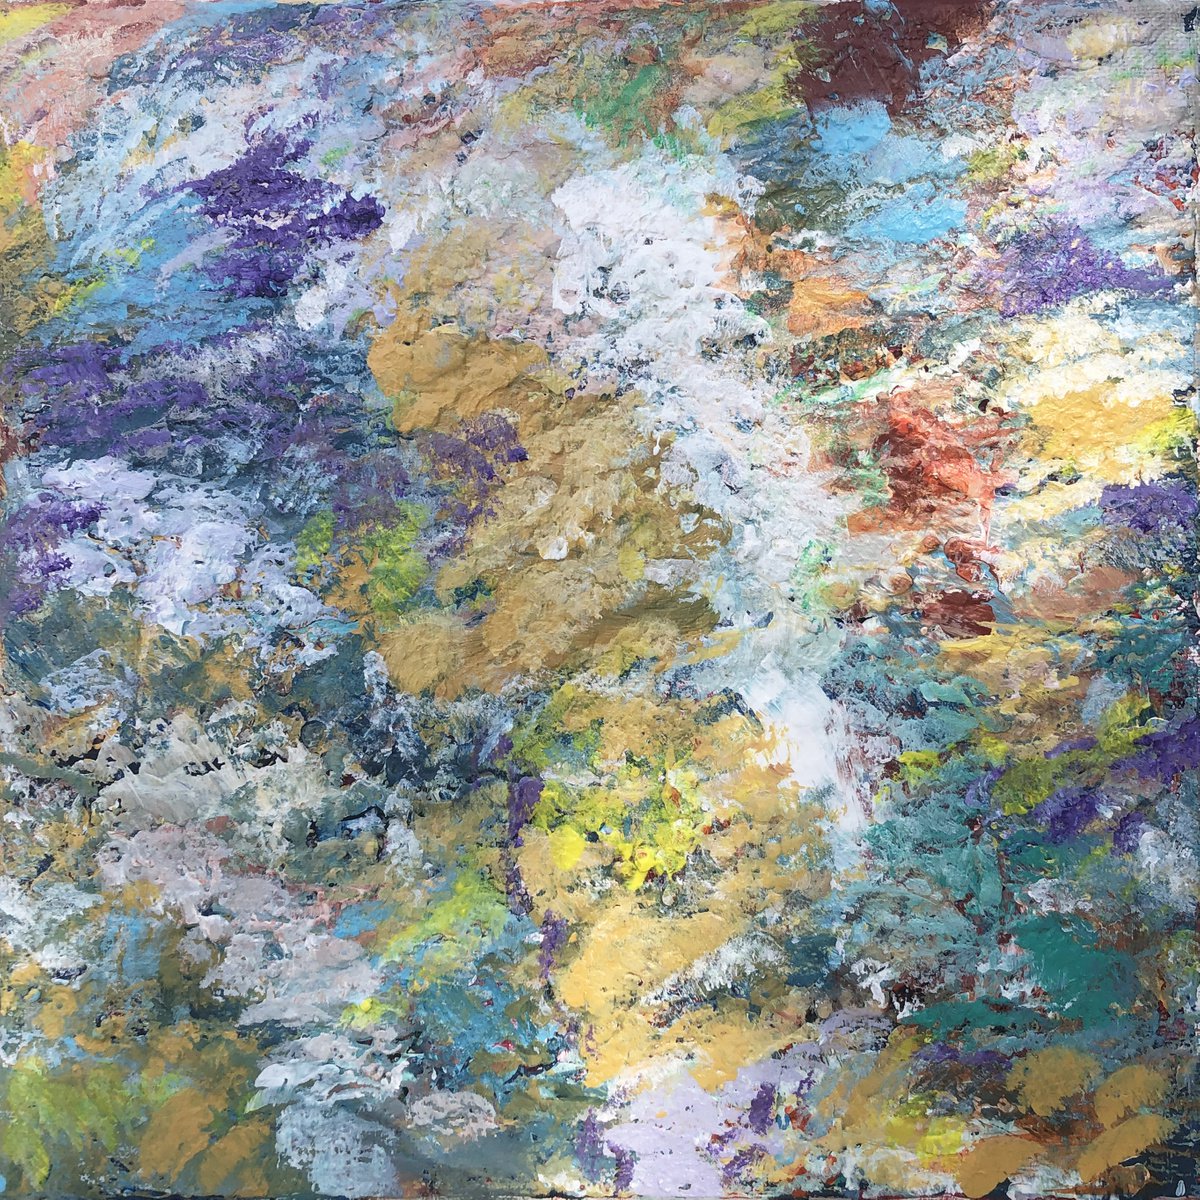 Nuvole Colorate by Paul Baaske